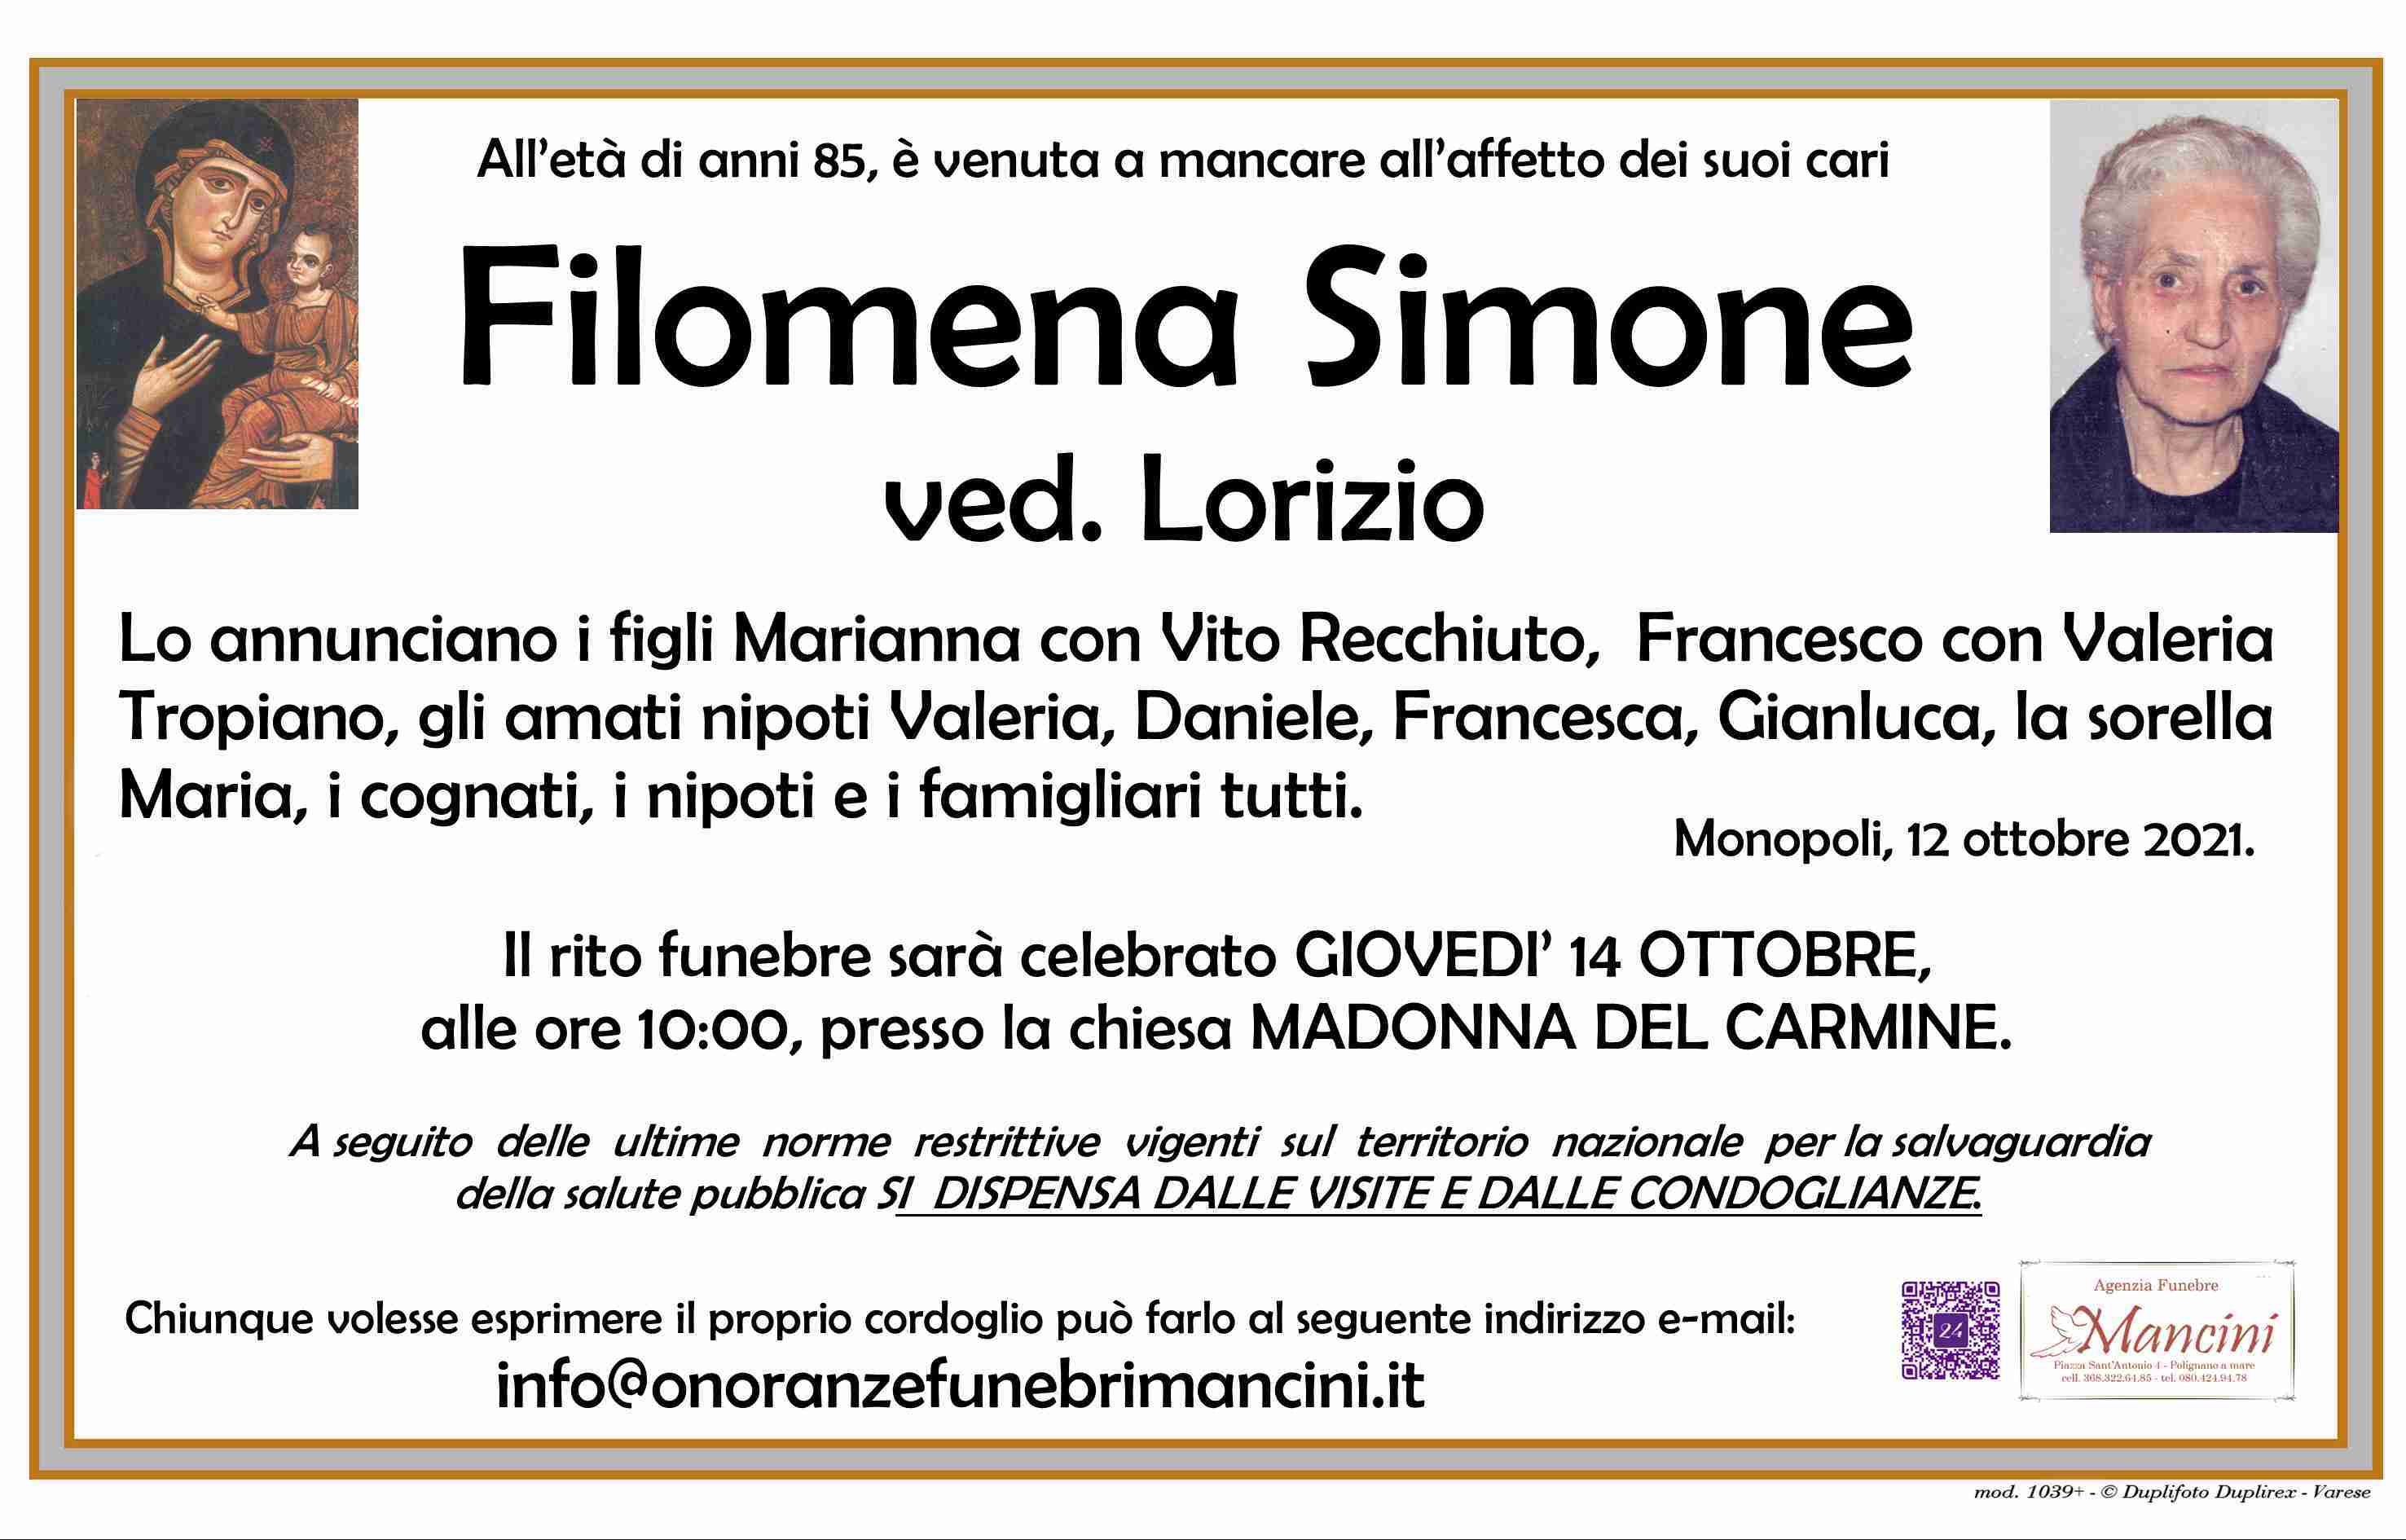 Filomena Simone